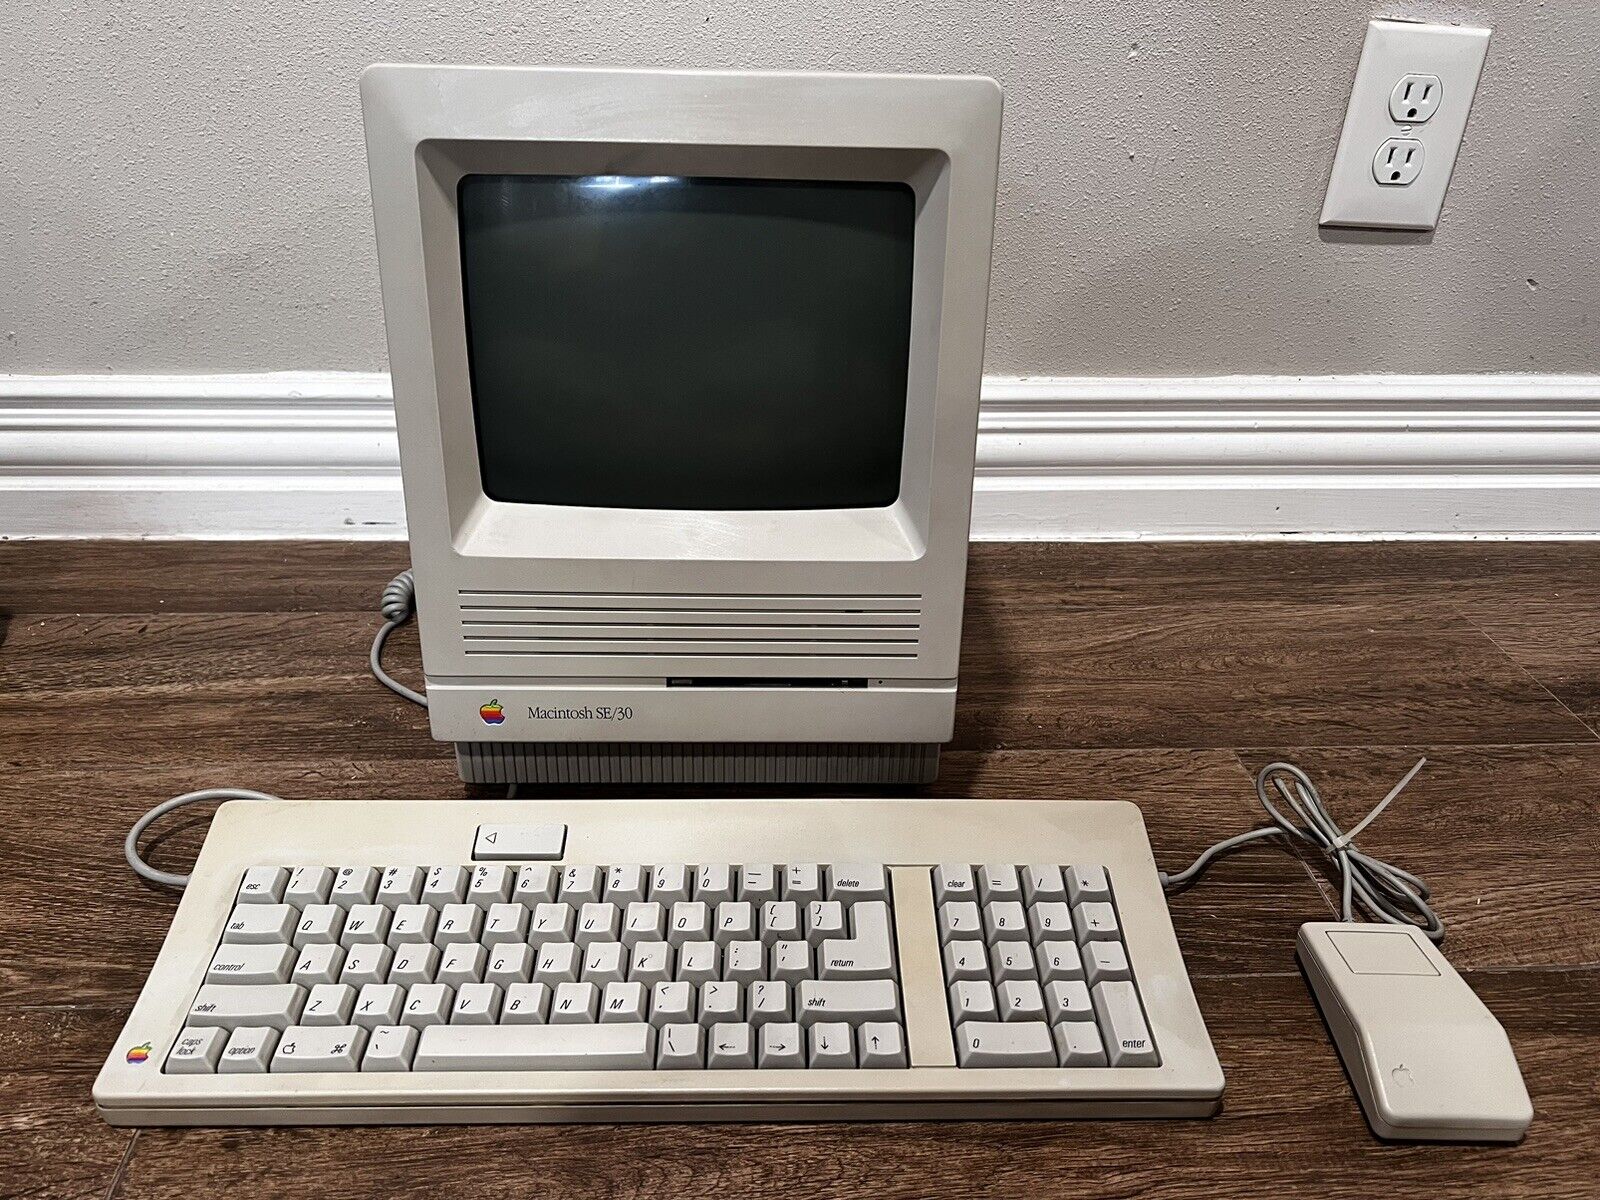 VTG Apple Macintosh SE/30 Computer Restored & Recapped BlueSCSI w/ Mount 8MB RAM